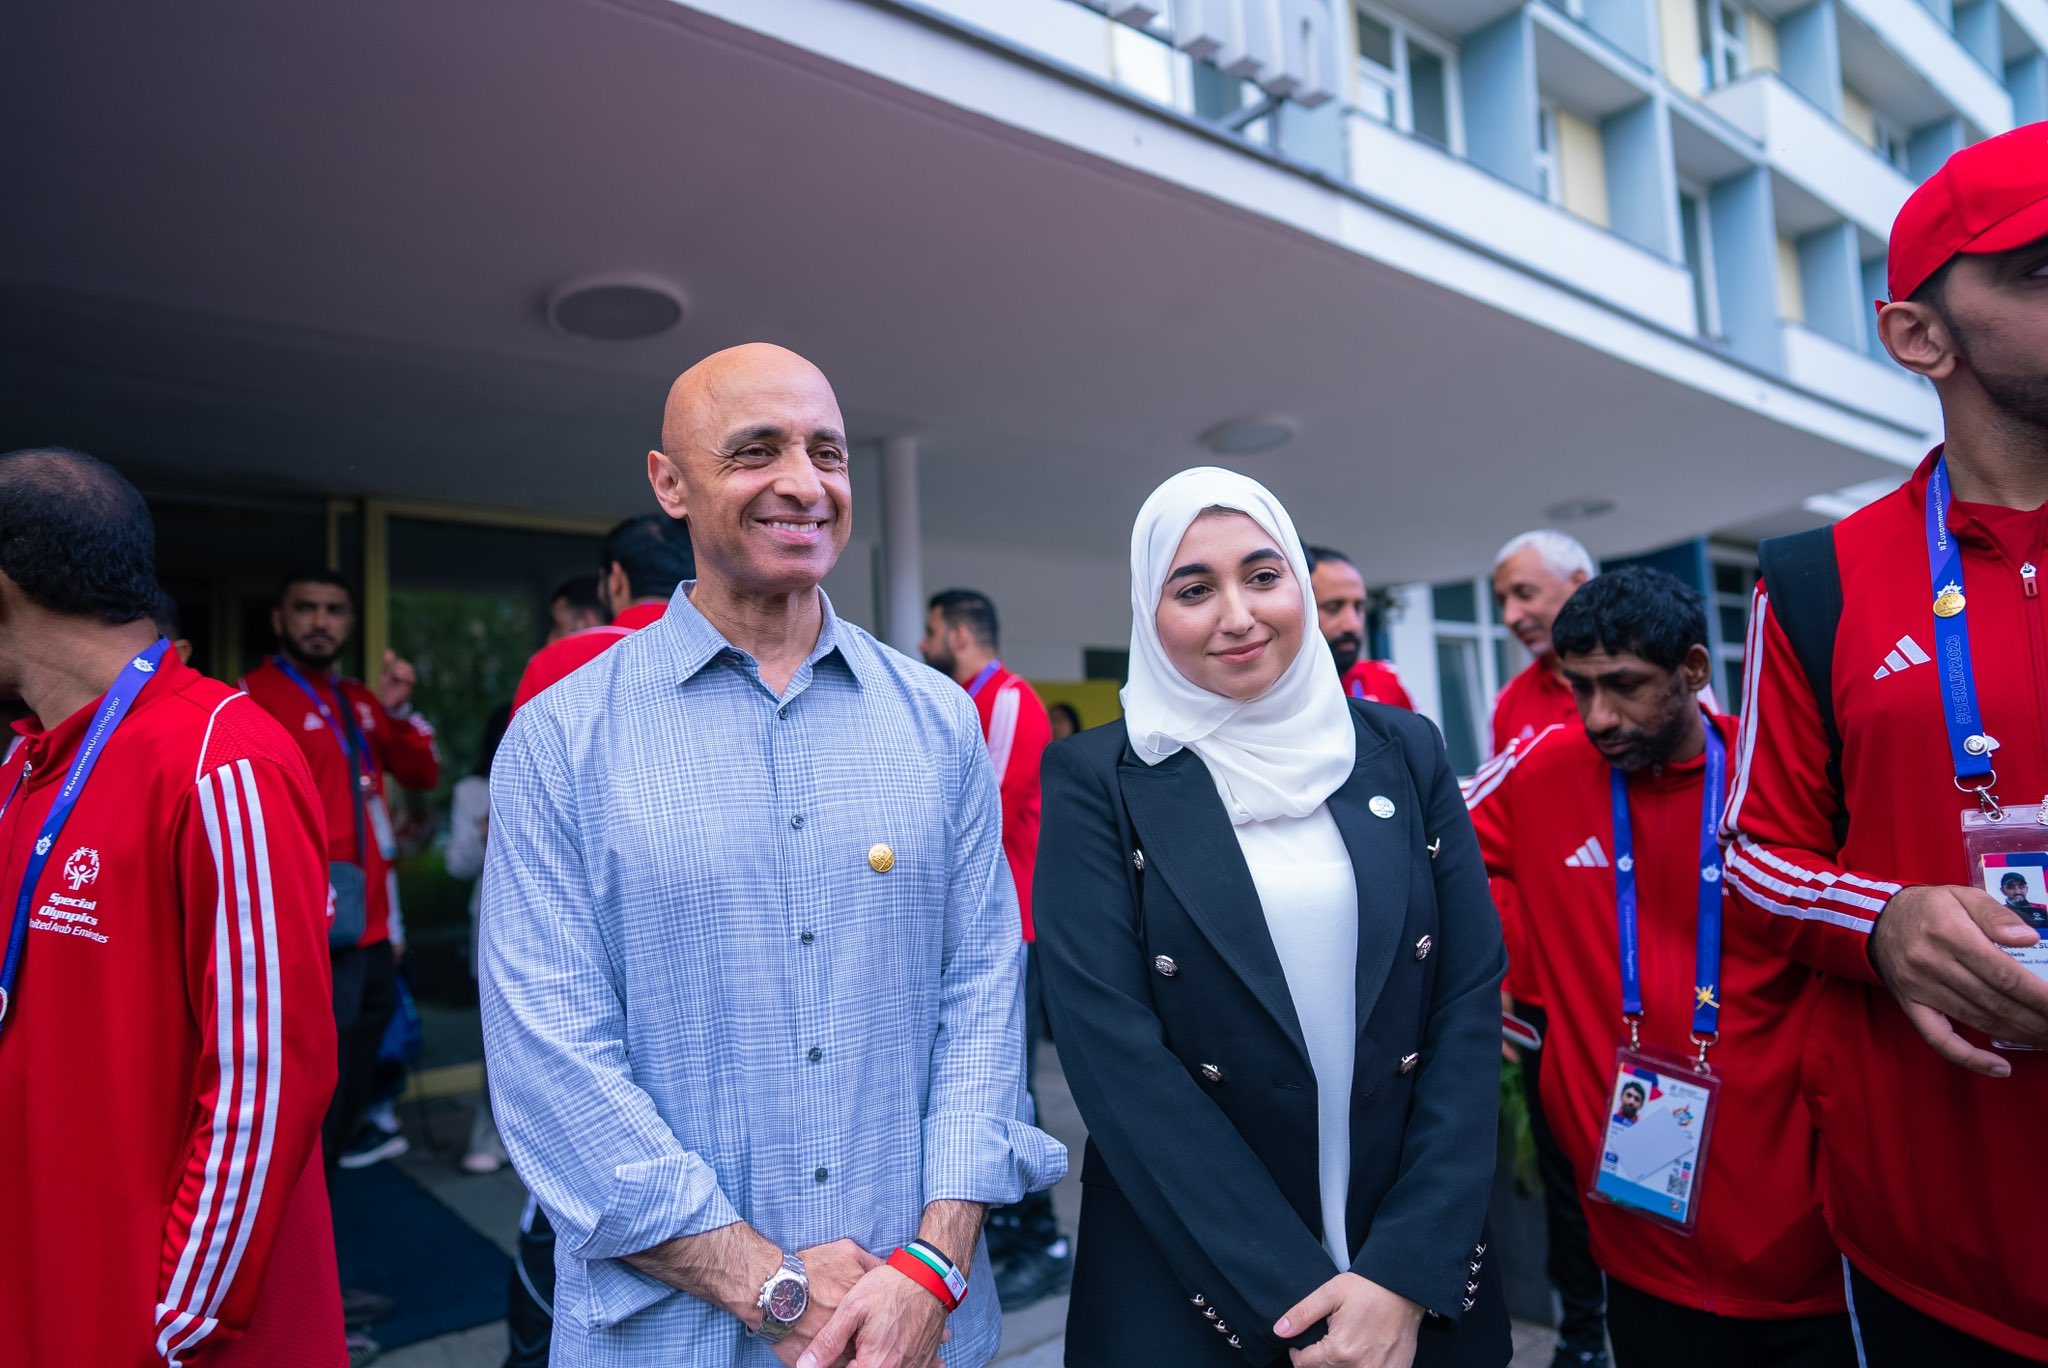 Ambassador Al Otaiba joins representatives of Team UAE at the Special Olympics World Games.